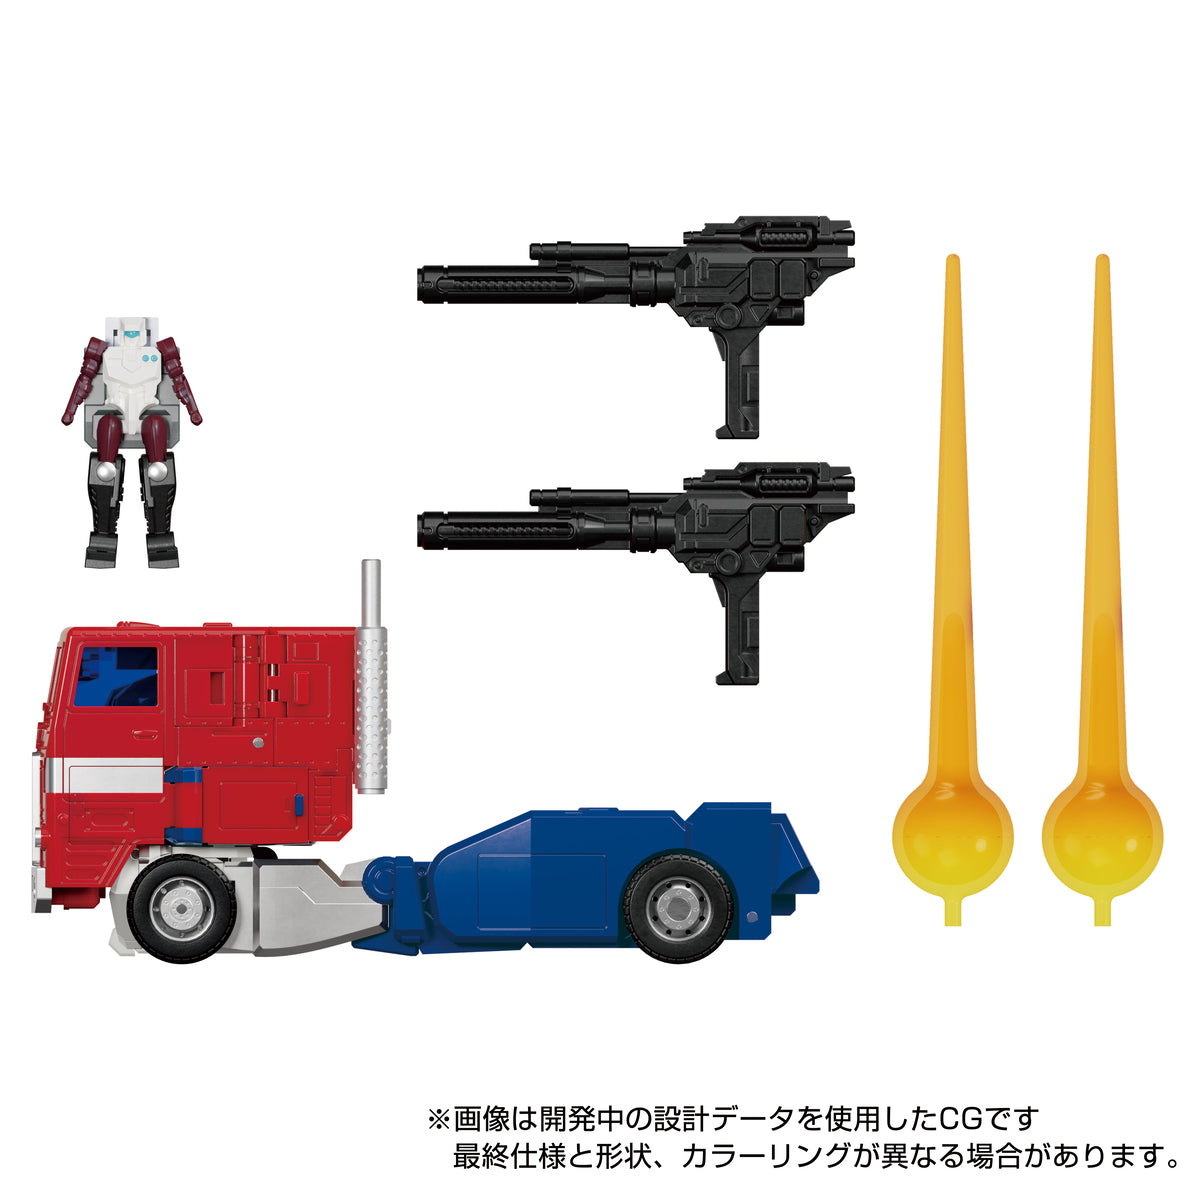 [PRE-ORDER] Transformers Masterpiece MP-60 Jinrai Action Figure Toy